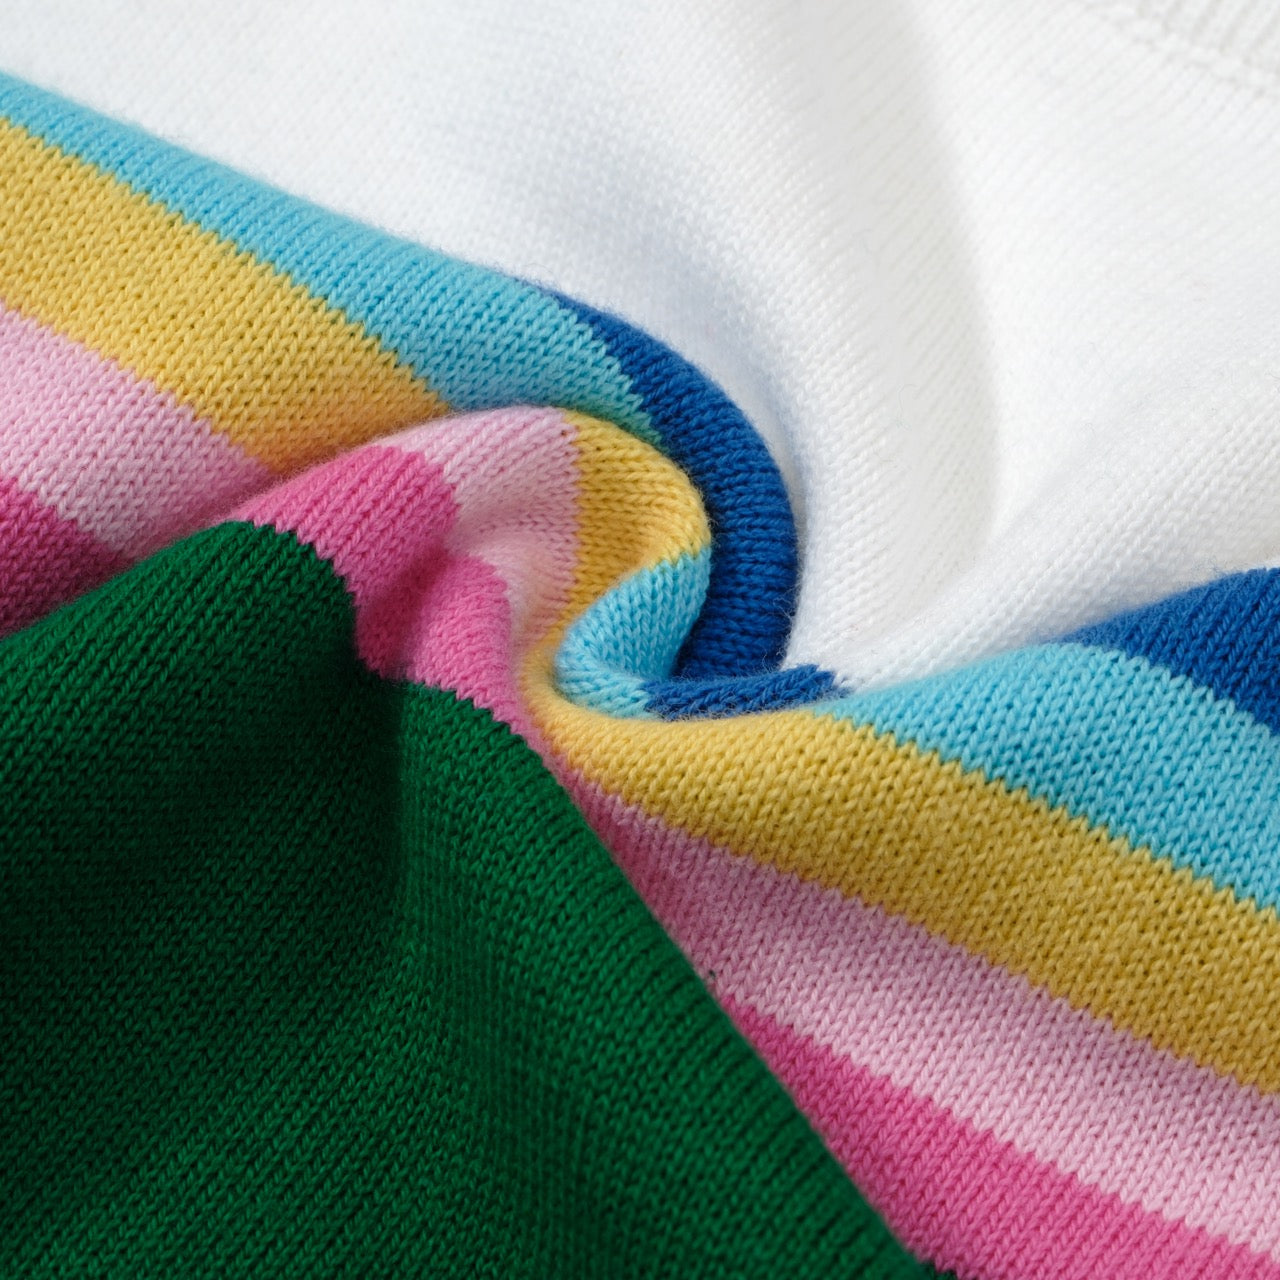 Women 1960s Retro Knit Long Sleeve Green Rainbow Striped Knit T-shirts